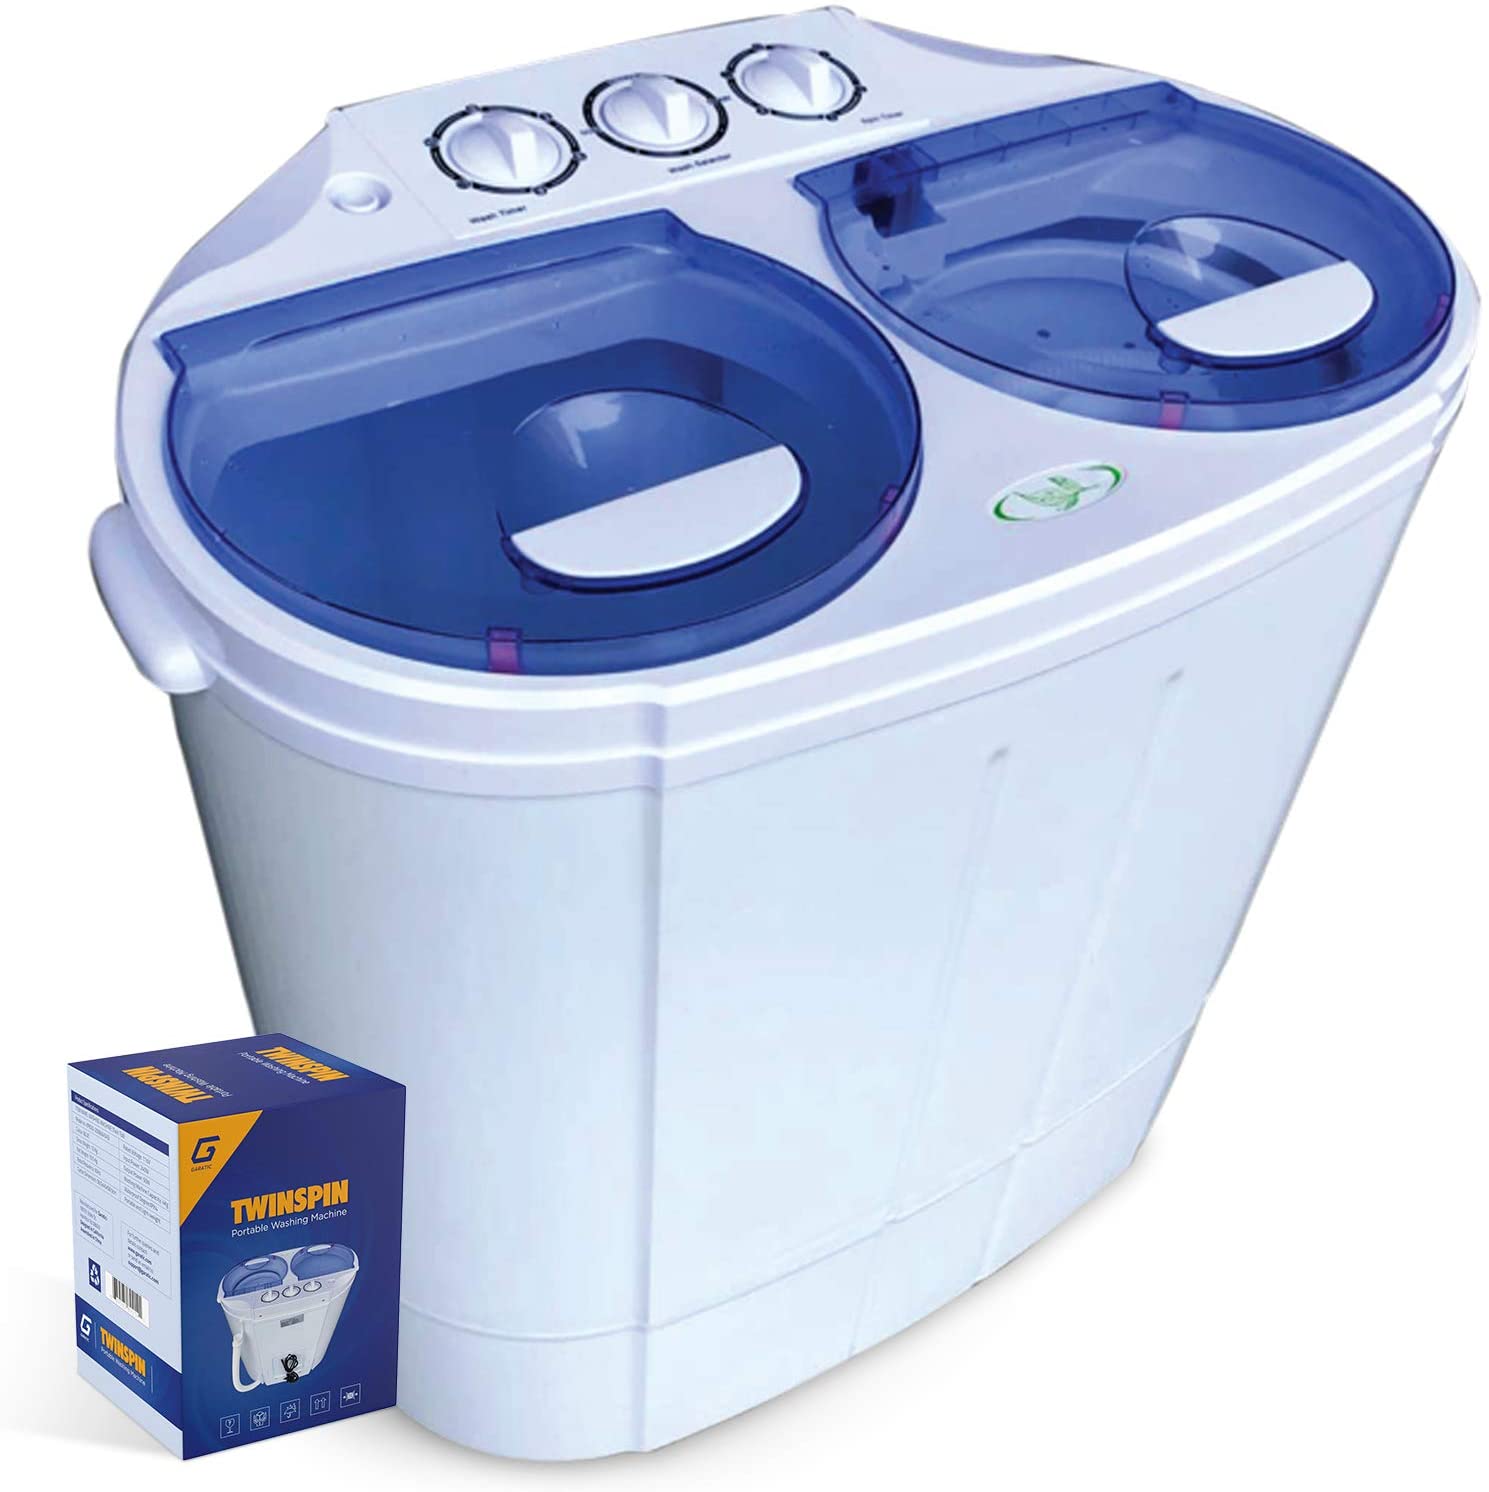 Garatic Portable Compact Washing Machine